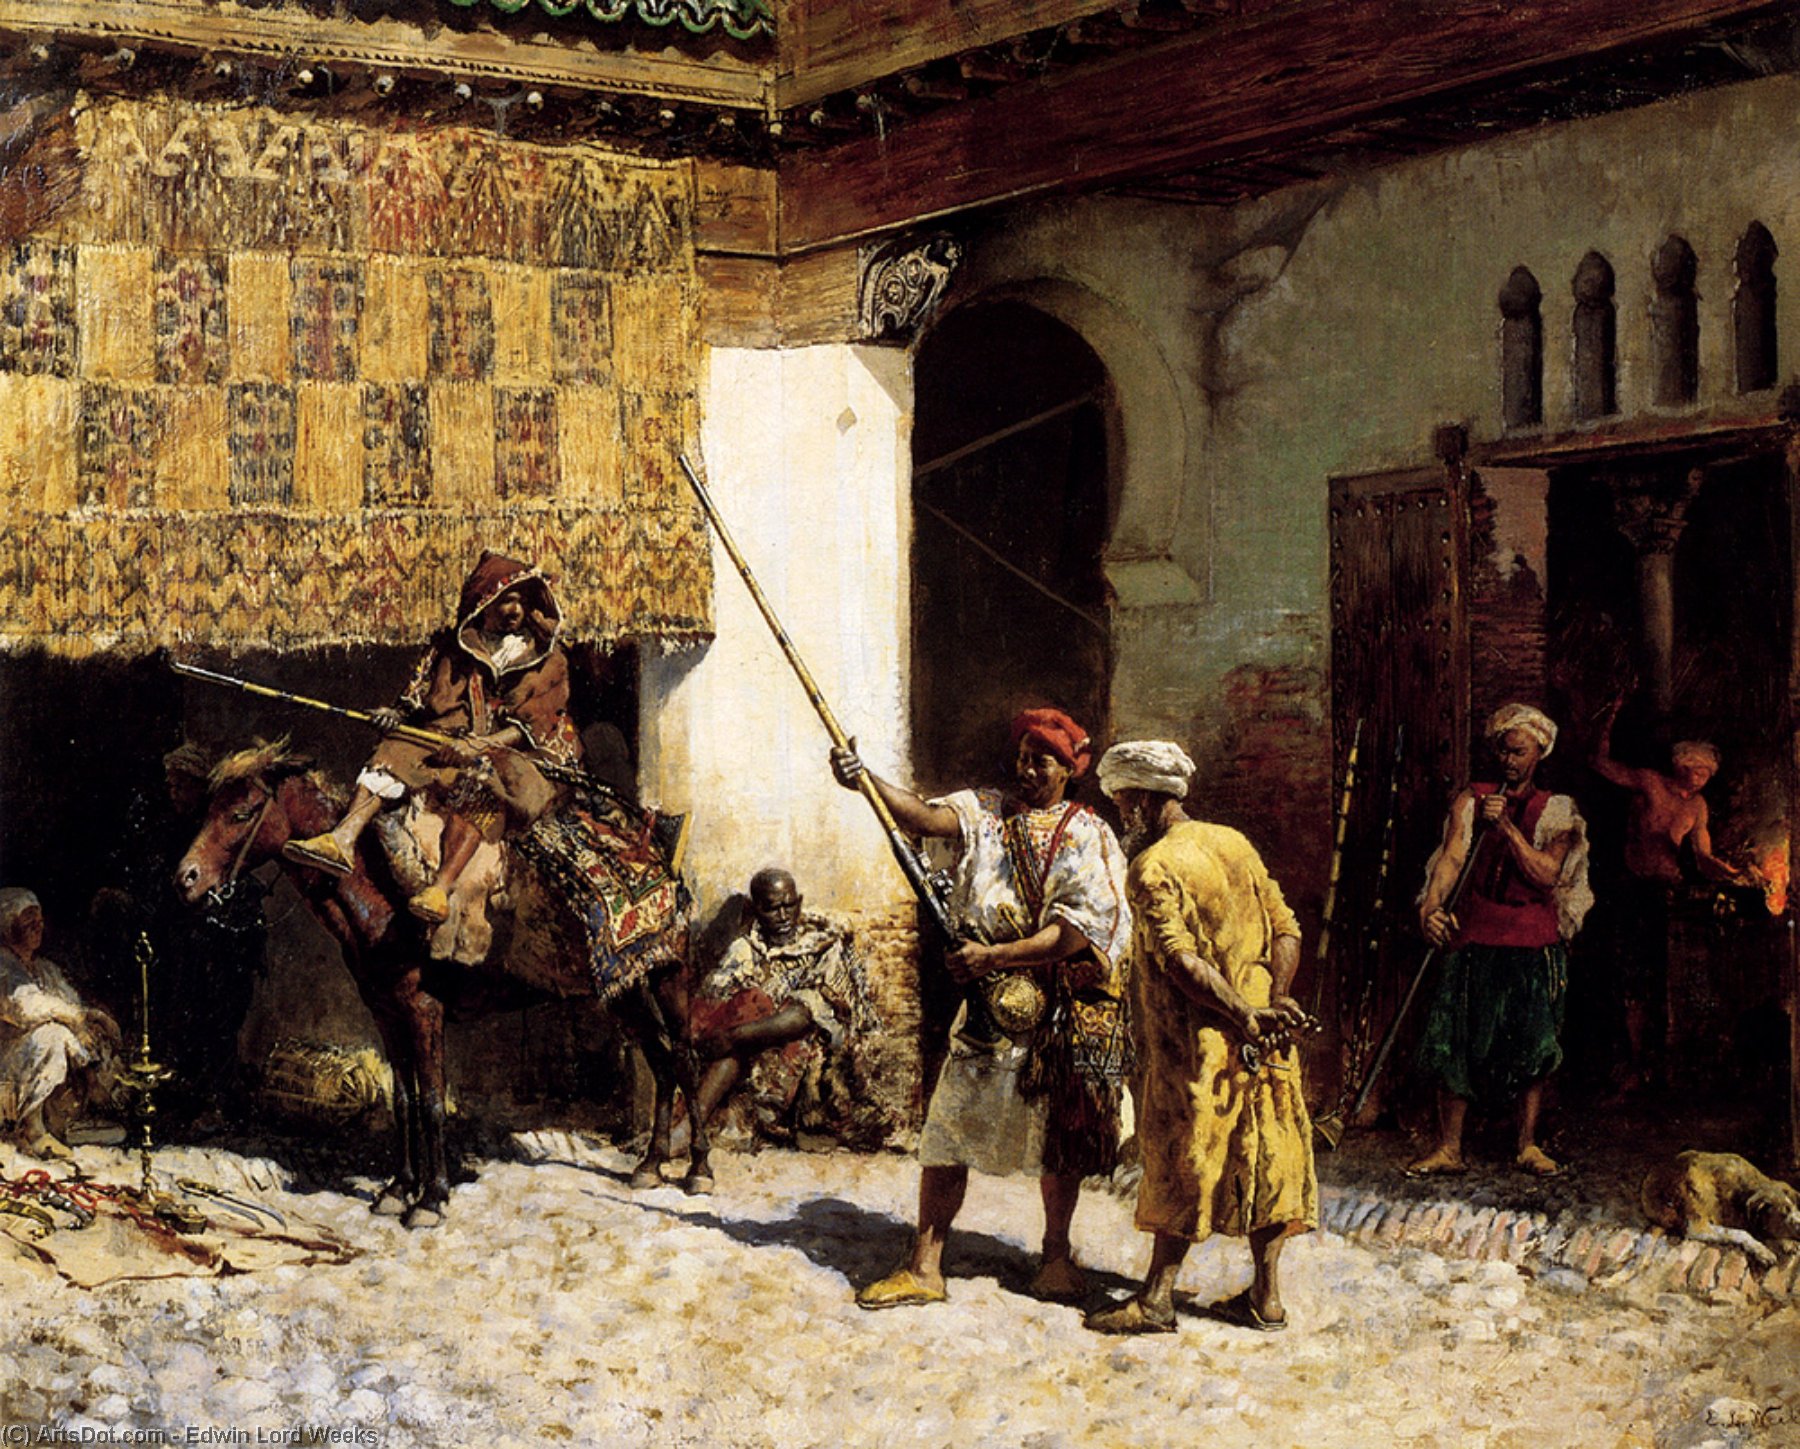 Buy Museum Art Reproductions The Arab Gunsmith by Edwin Lord Weeks (1849-1903, United States) | ArtsDot.com